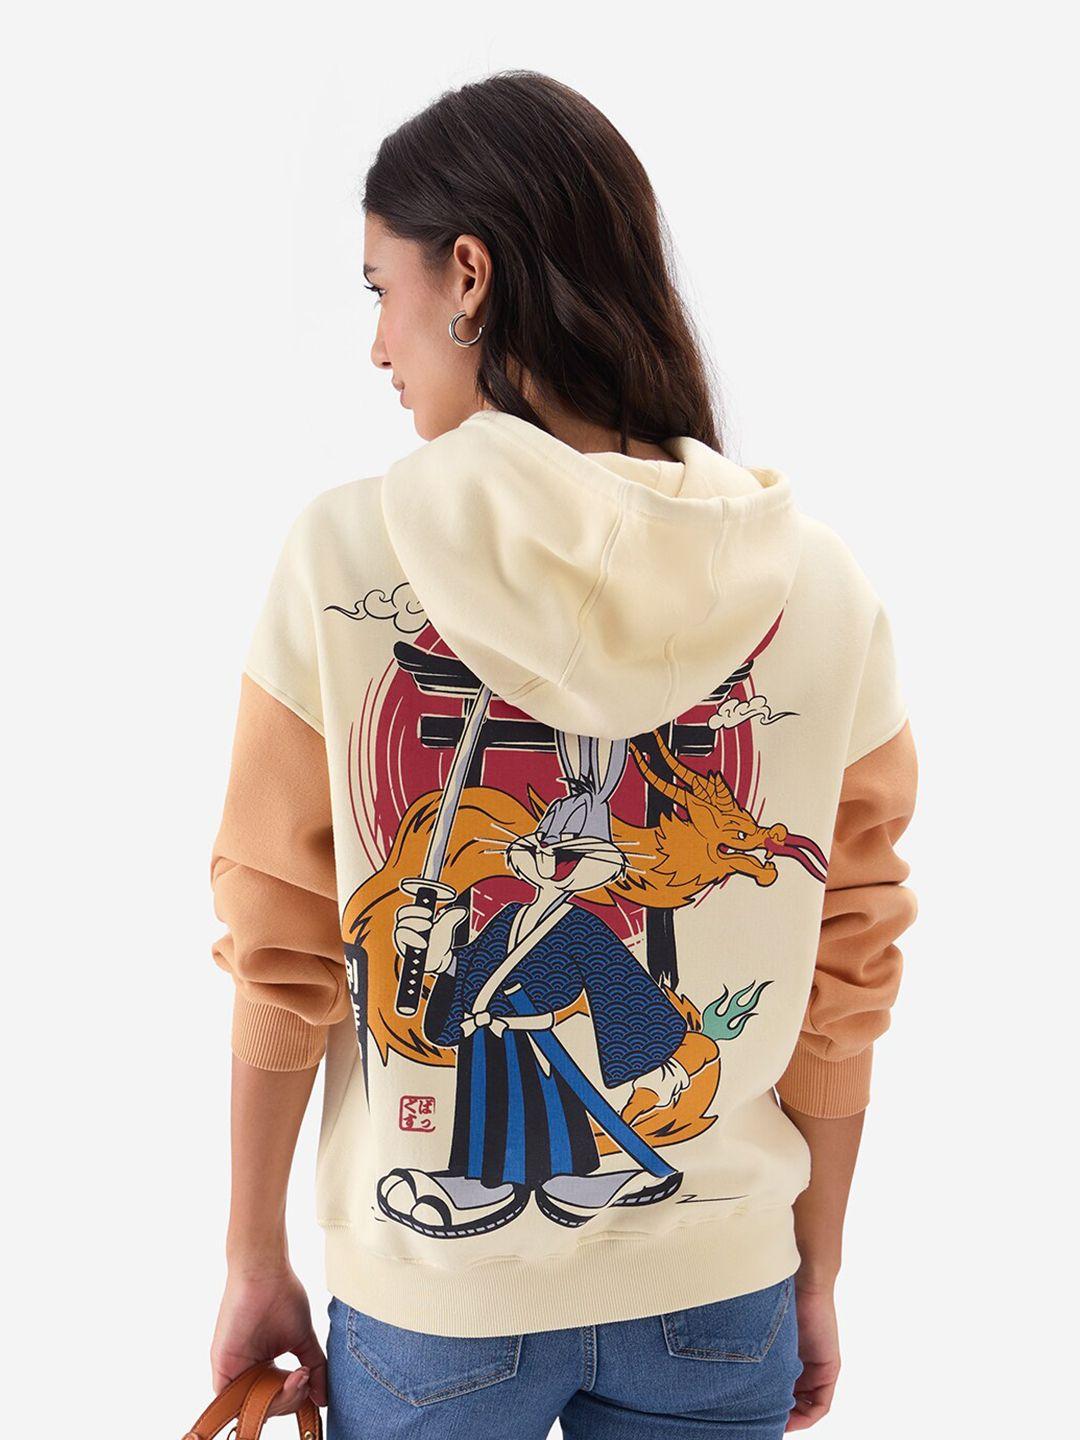 The Souled Store Looney Tunes Printed Hooded Sweatshirt